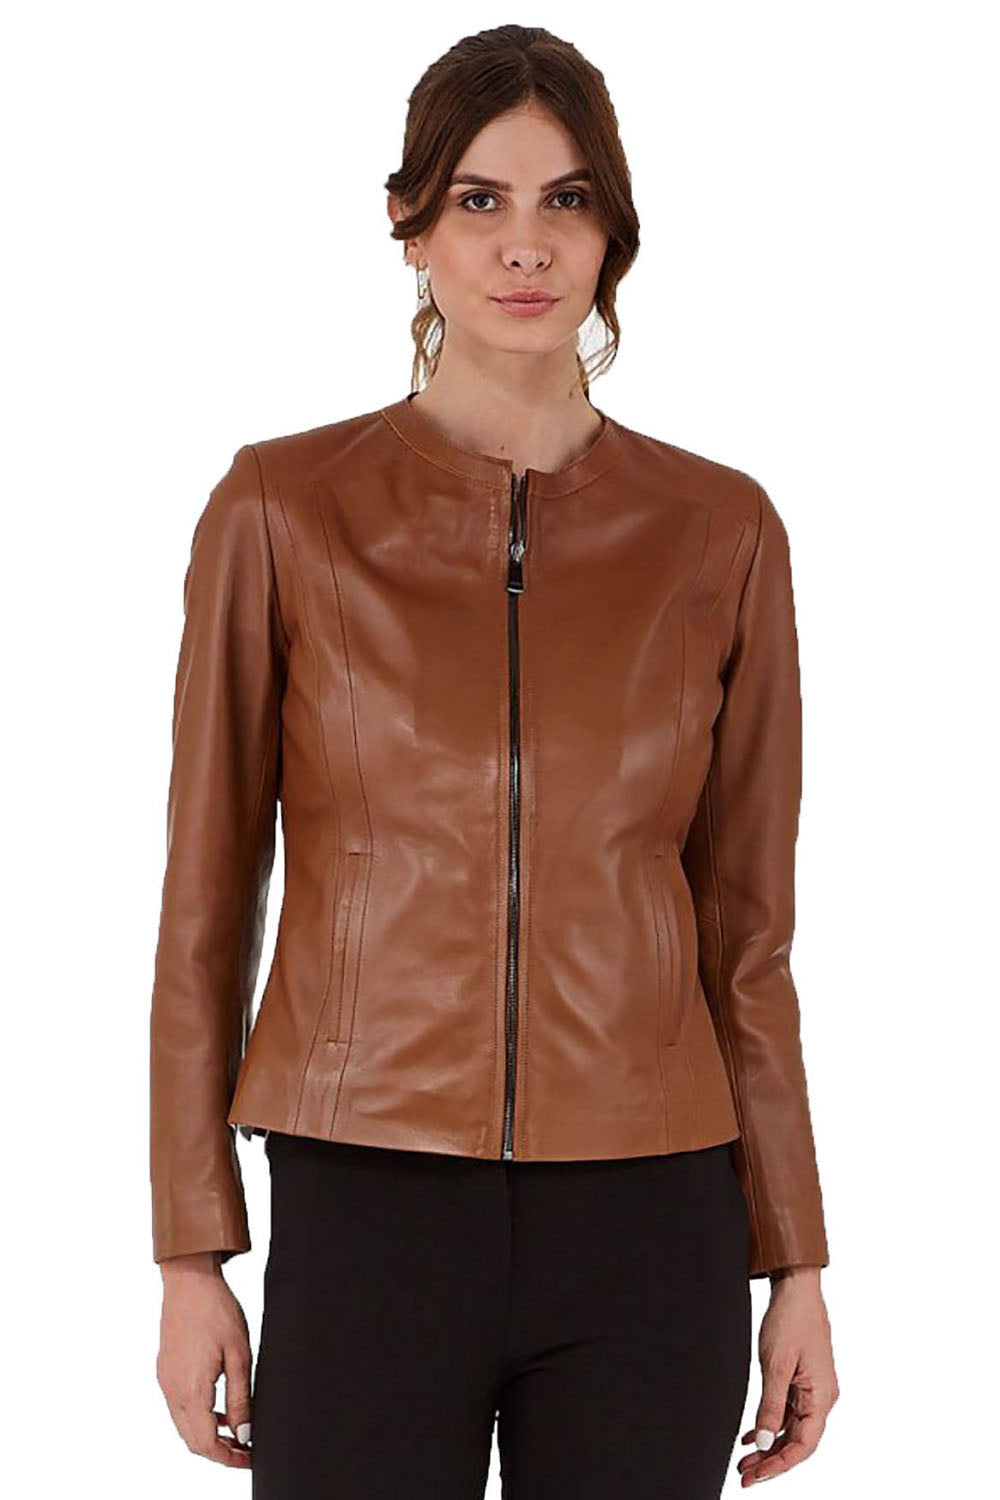 Women Genuine Leather Jacket WJ114 SkinOutfit